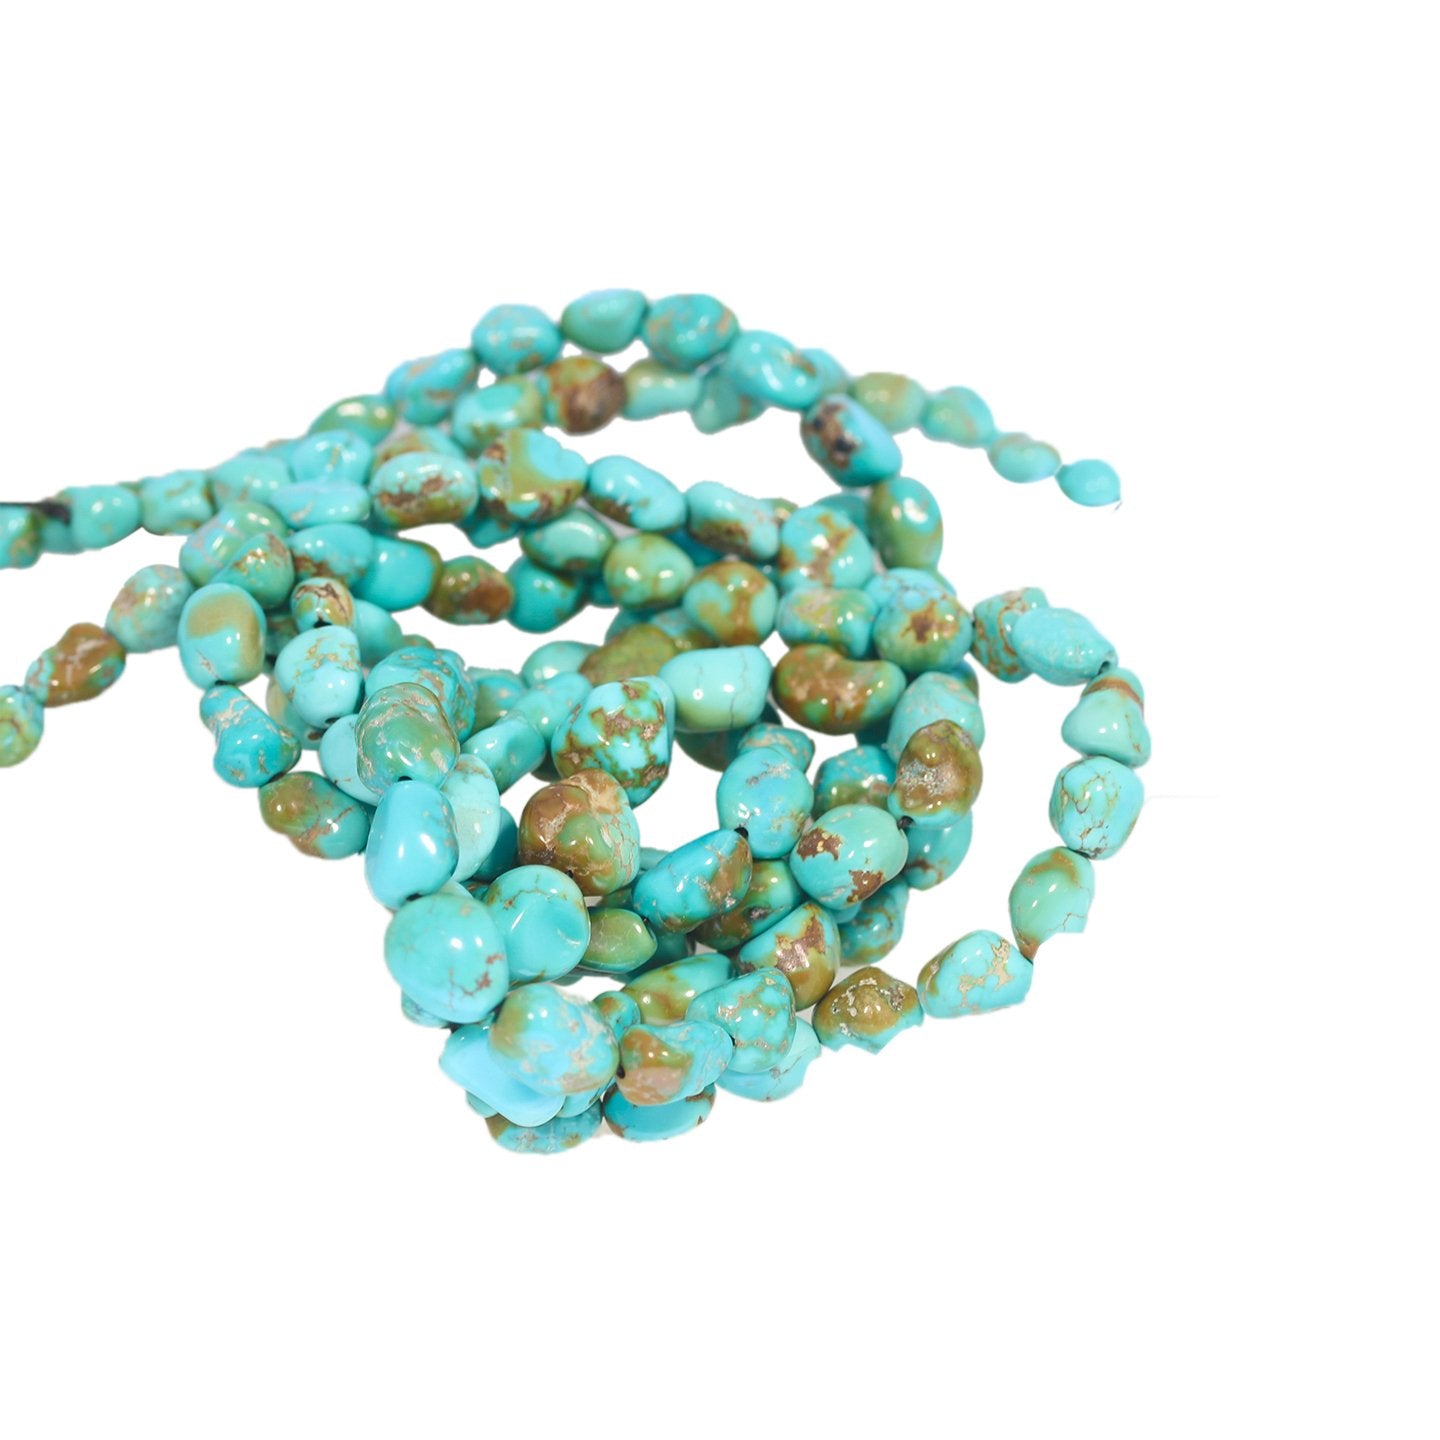 Sierra Nevada Turquoise Beads Nevada Potato Shape -NewWorldGems